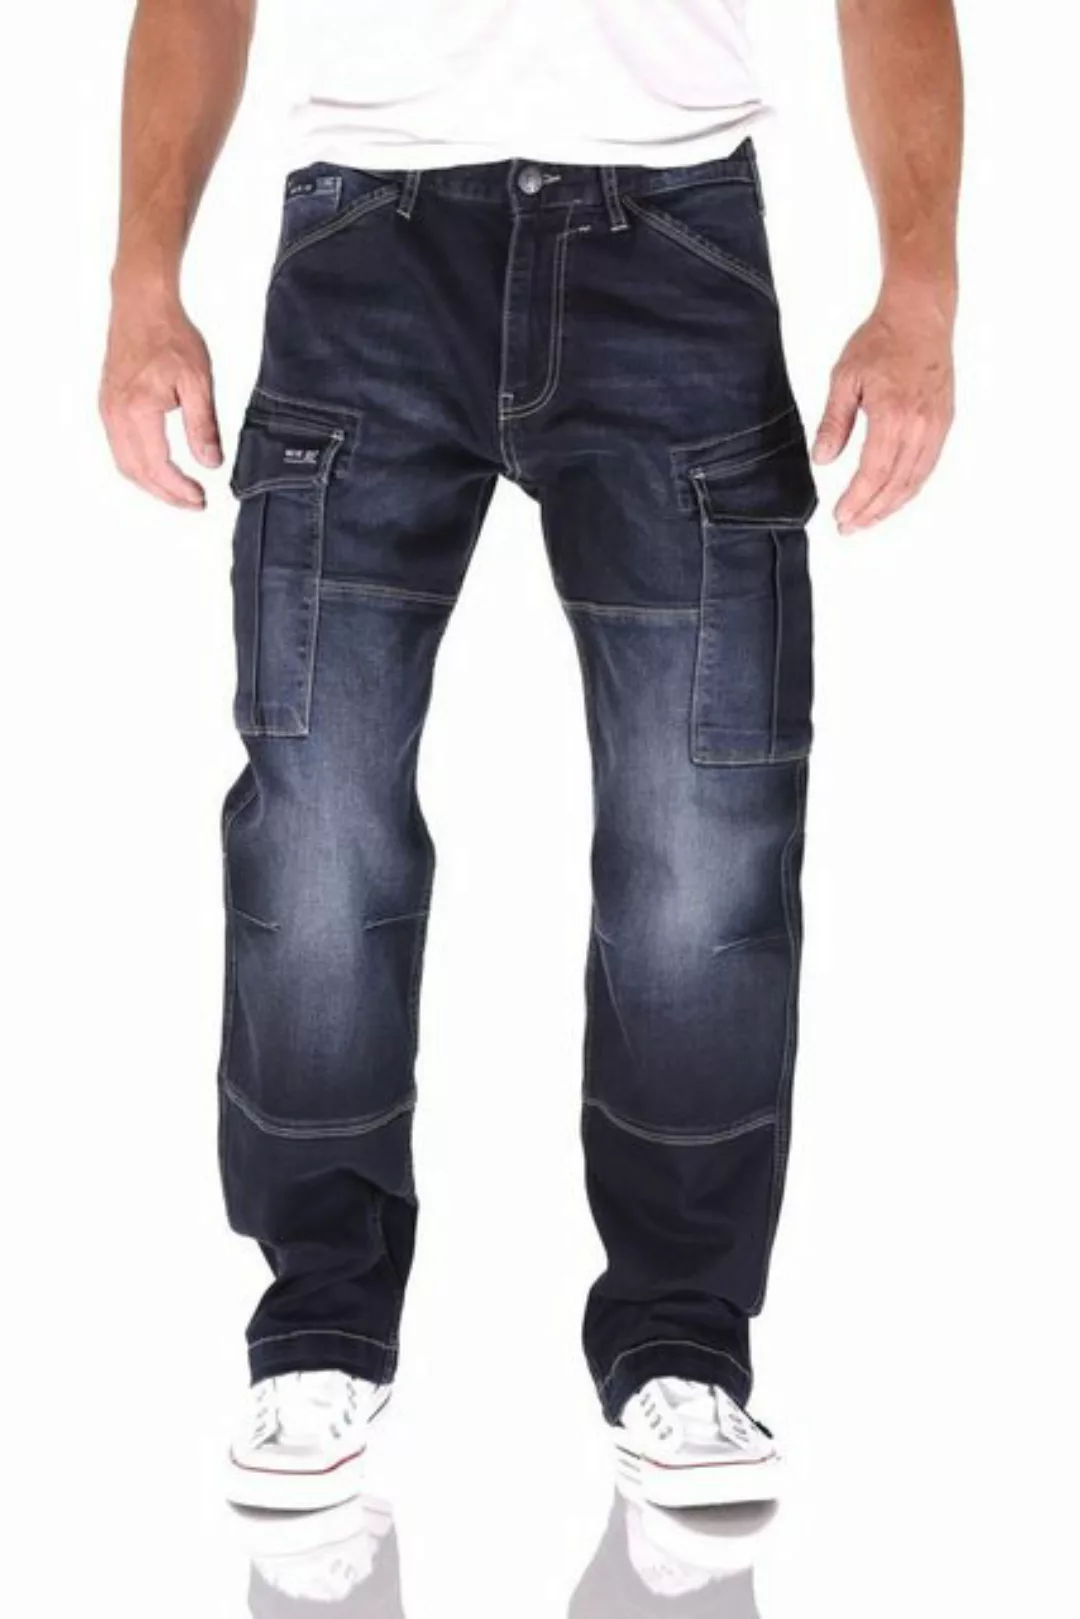 Big Seven Cargojeans Big Seven Brian SLC Cargo Comfort Fit Herren Jeans Hos günstig online kaufen